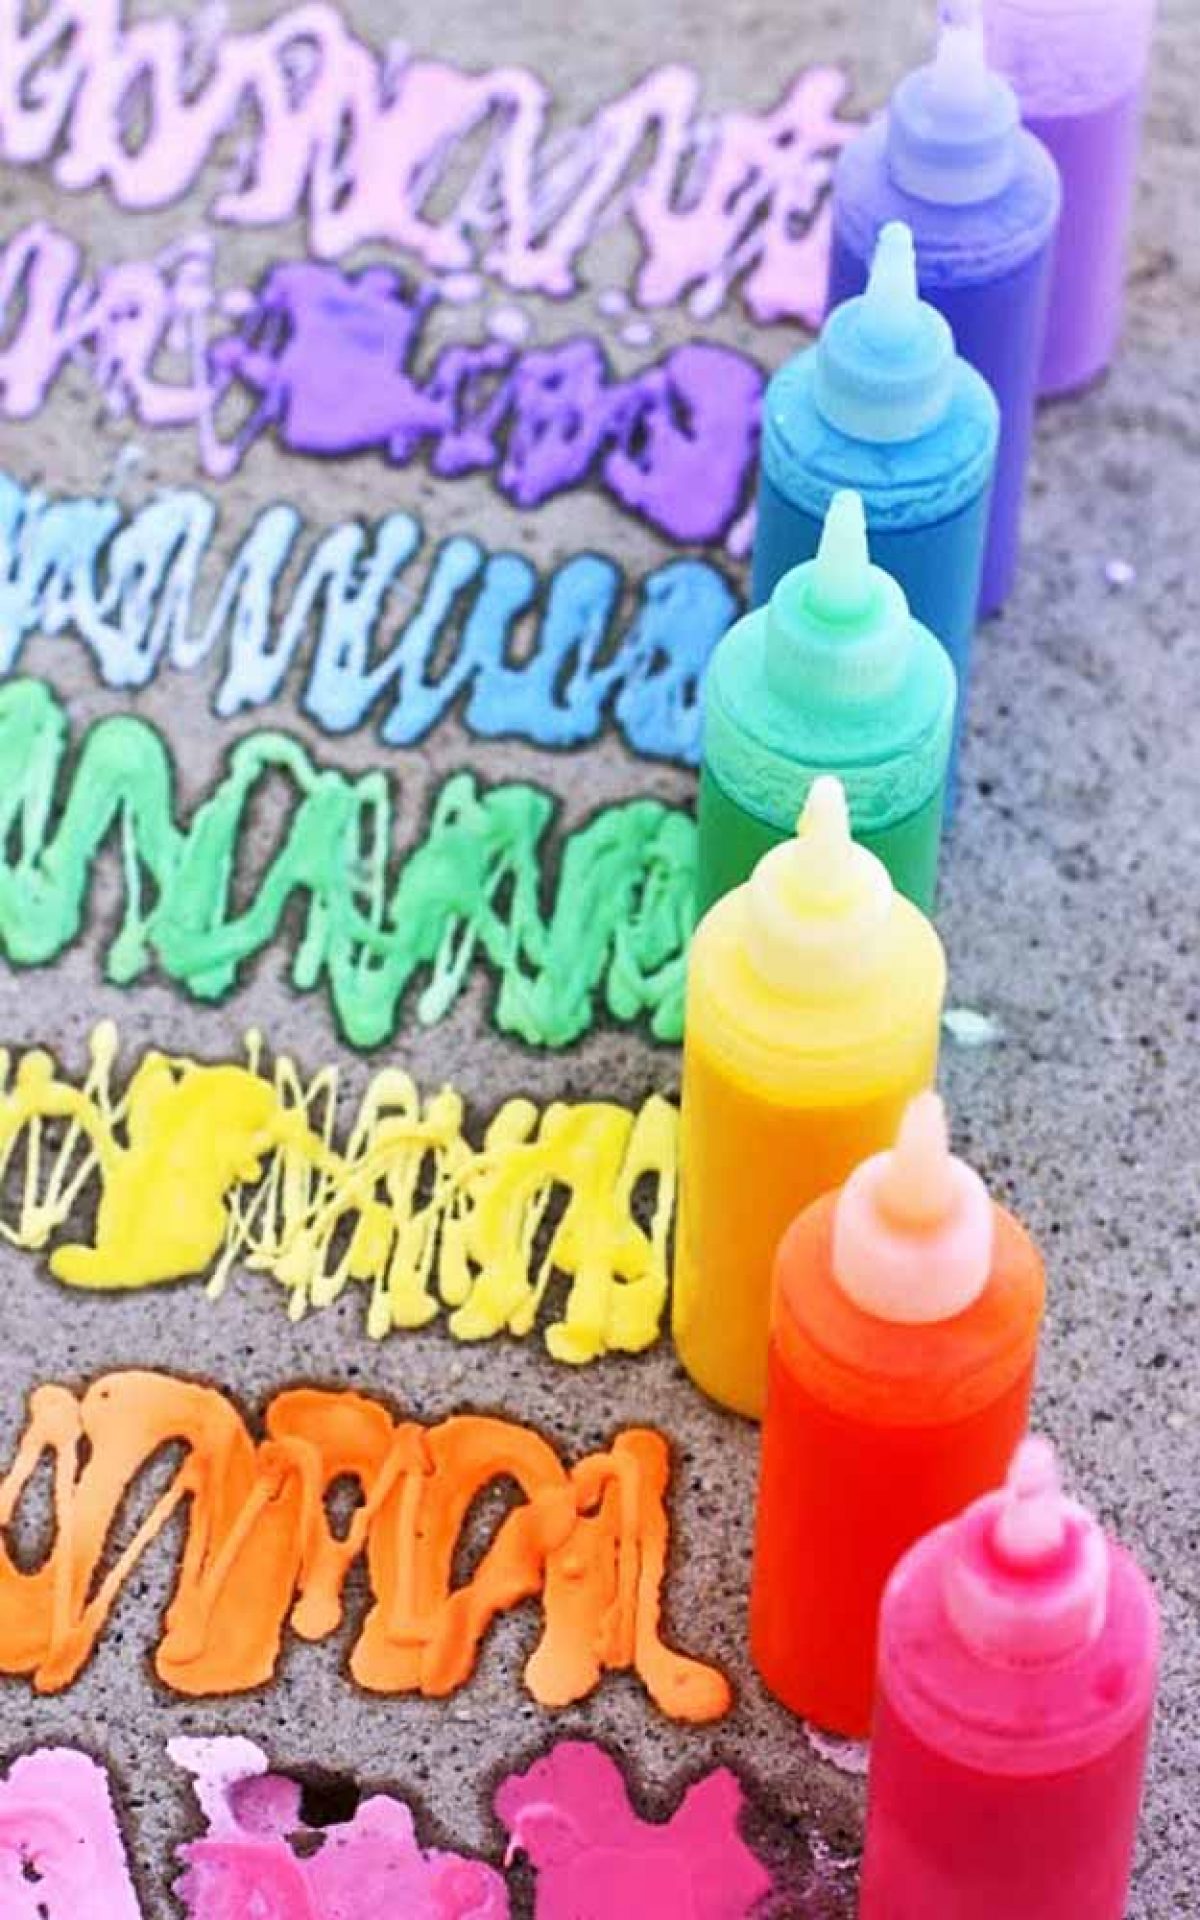 Homemade Edible Paint for Kids - TinkerLab